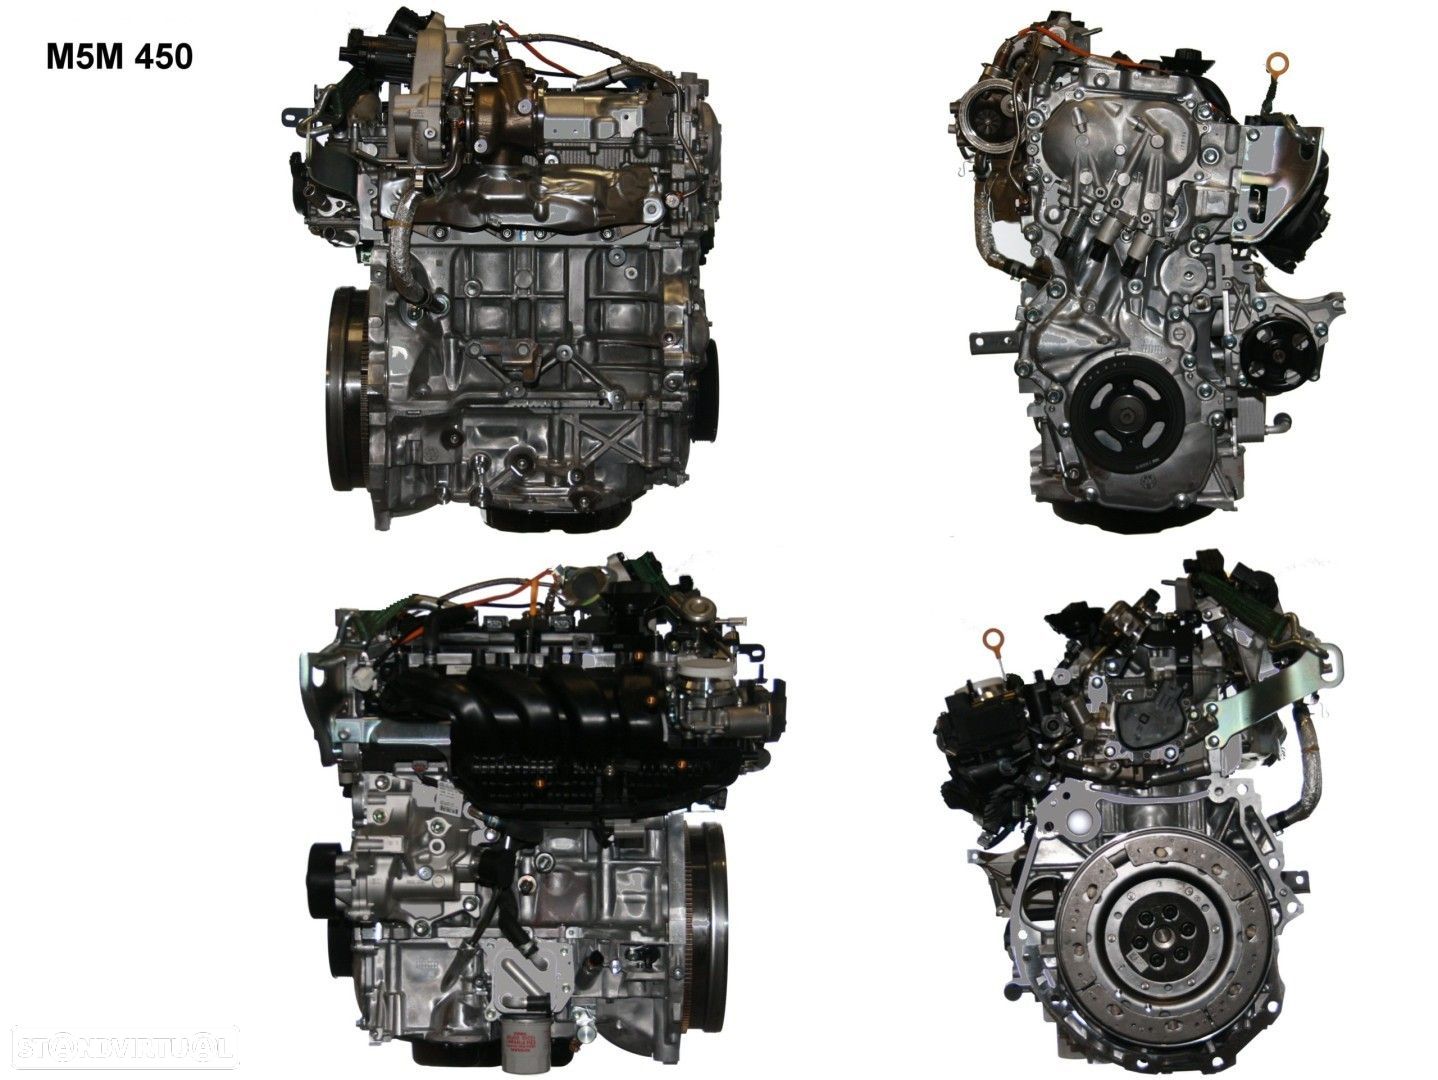 Motor Completo  Novo RENAULT TALISMAN 1.6 TCe M5M 450 - 1